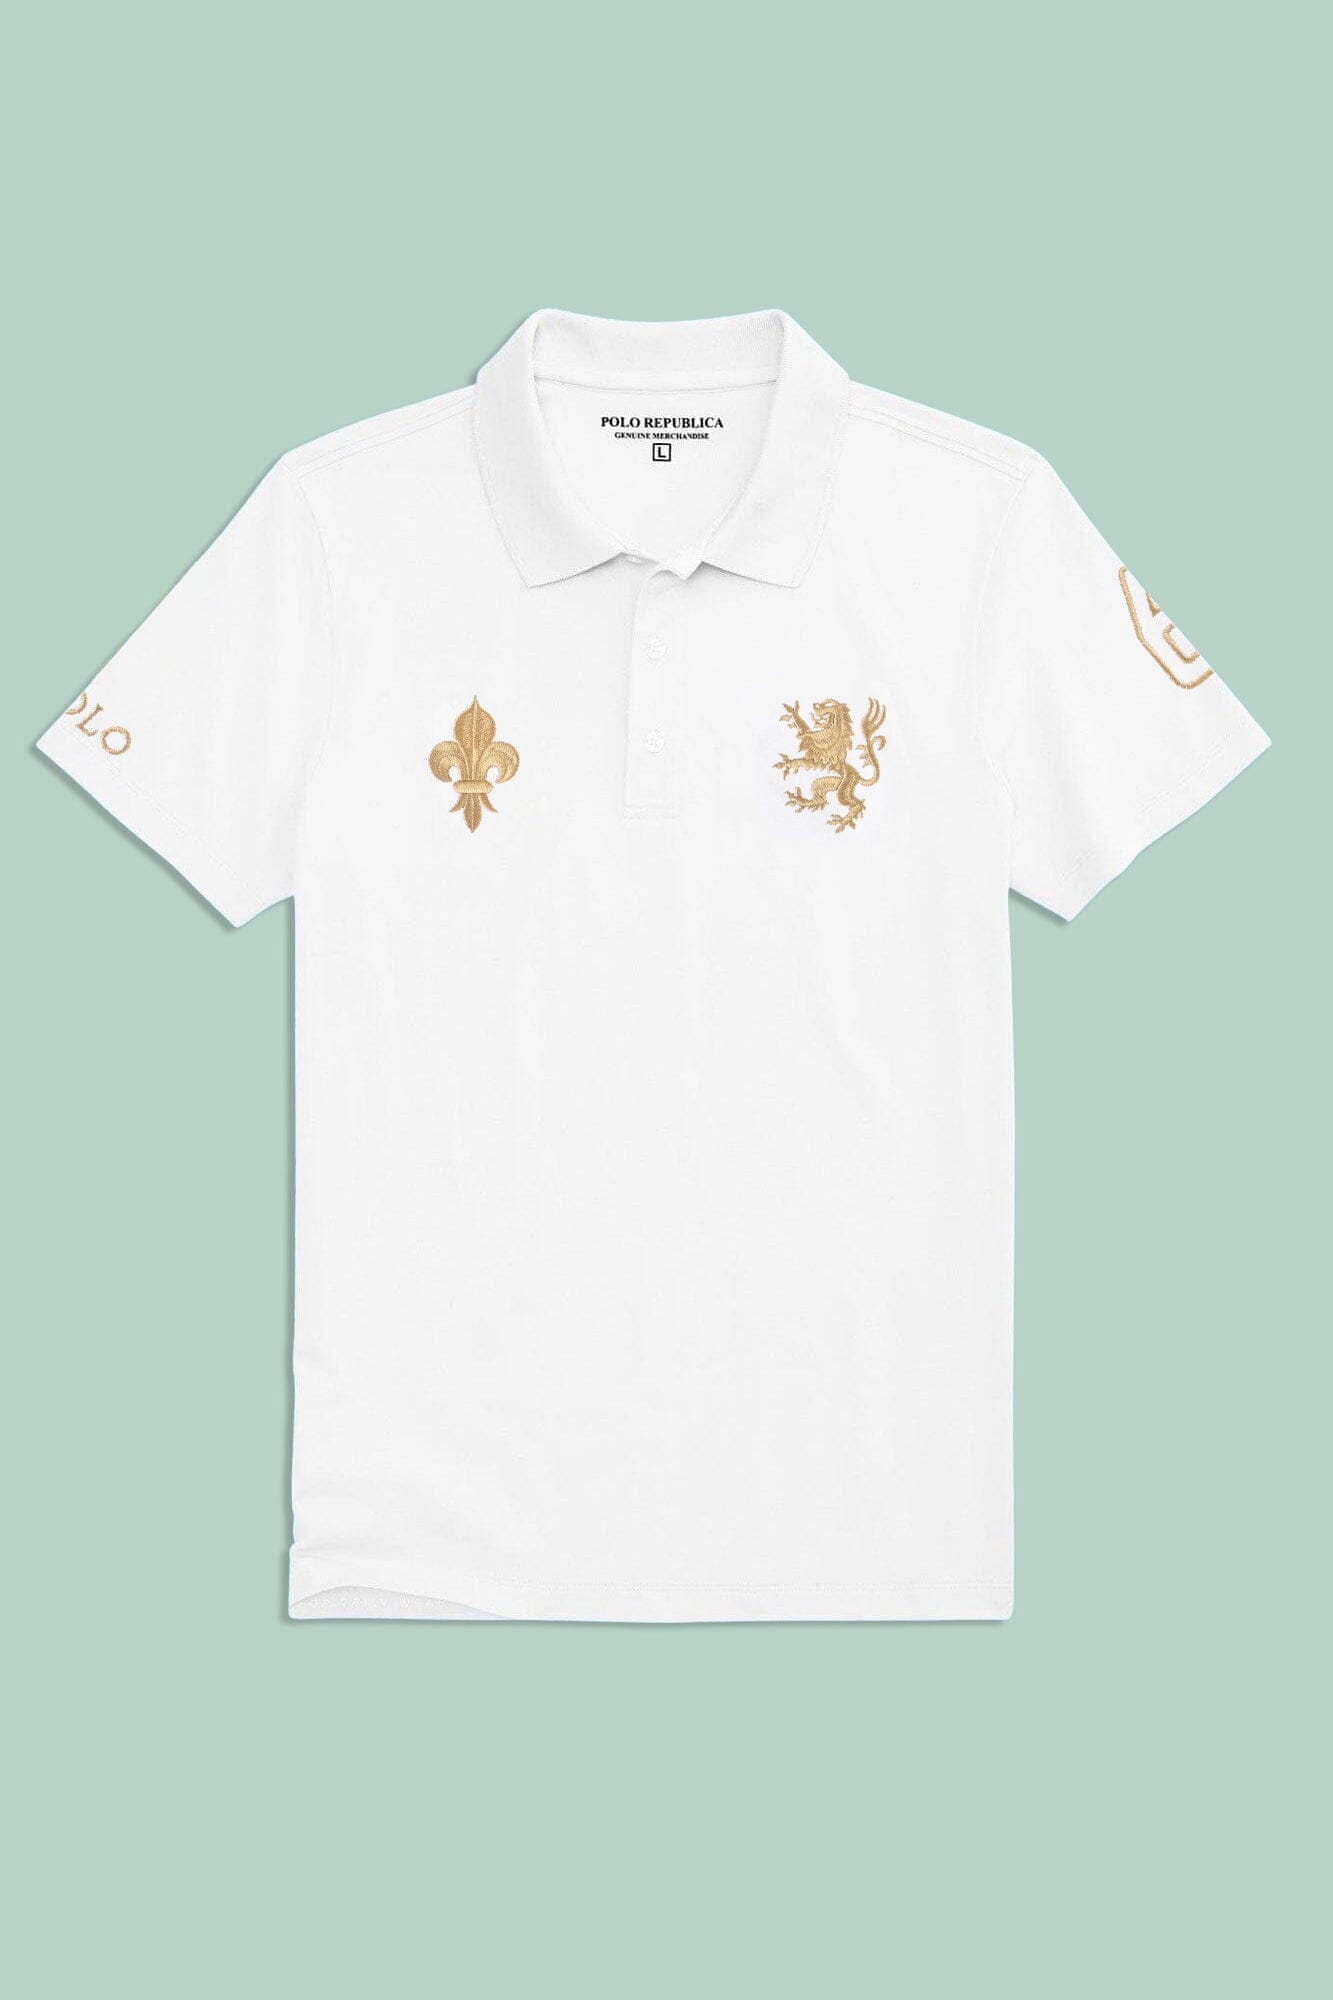 Polo Republica Men's Lion Crest & 9 Polo Embroidered Short Sleeve Polo Shirt Men's Polo Shirt Polo Republica 